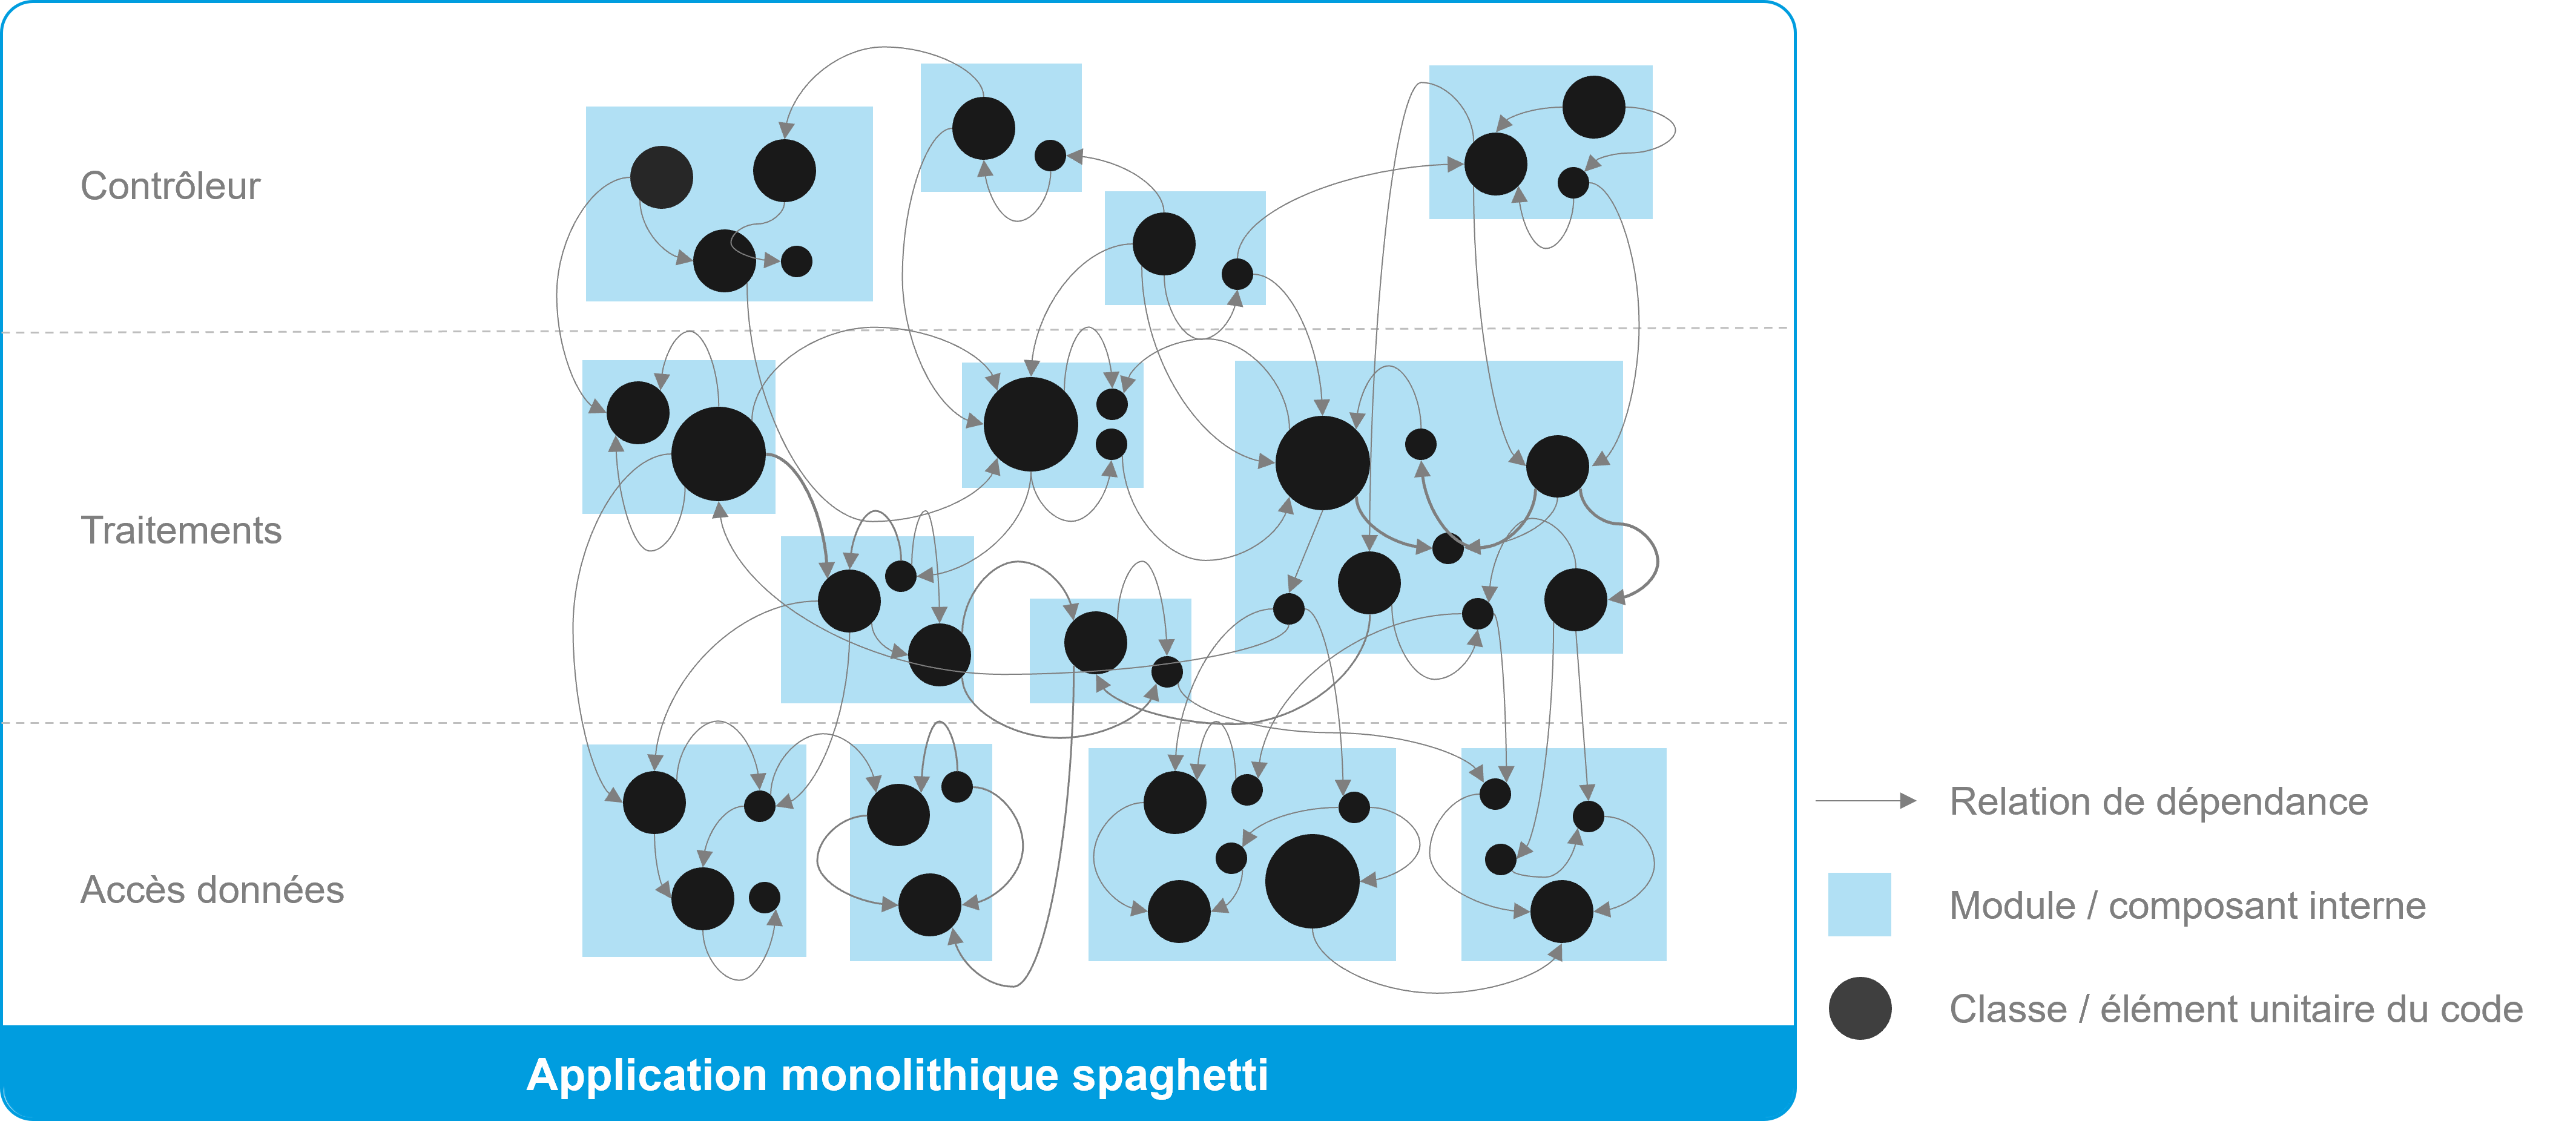 Onepoint - Monolithe spaghetti